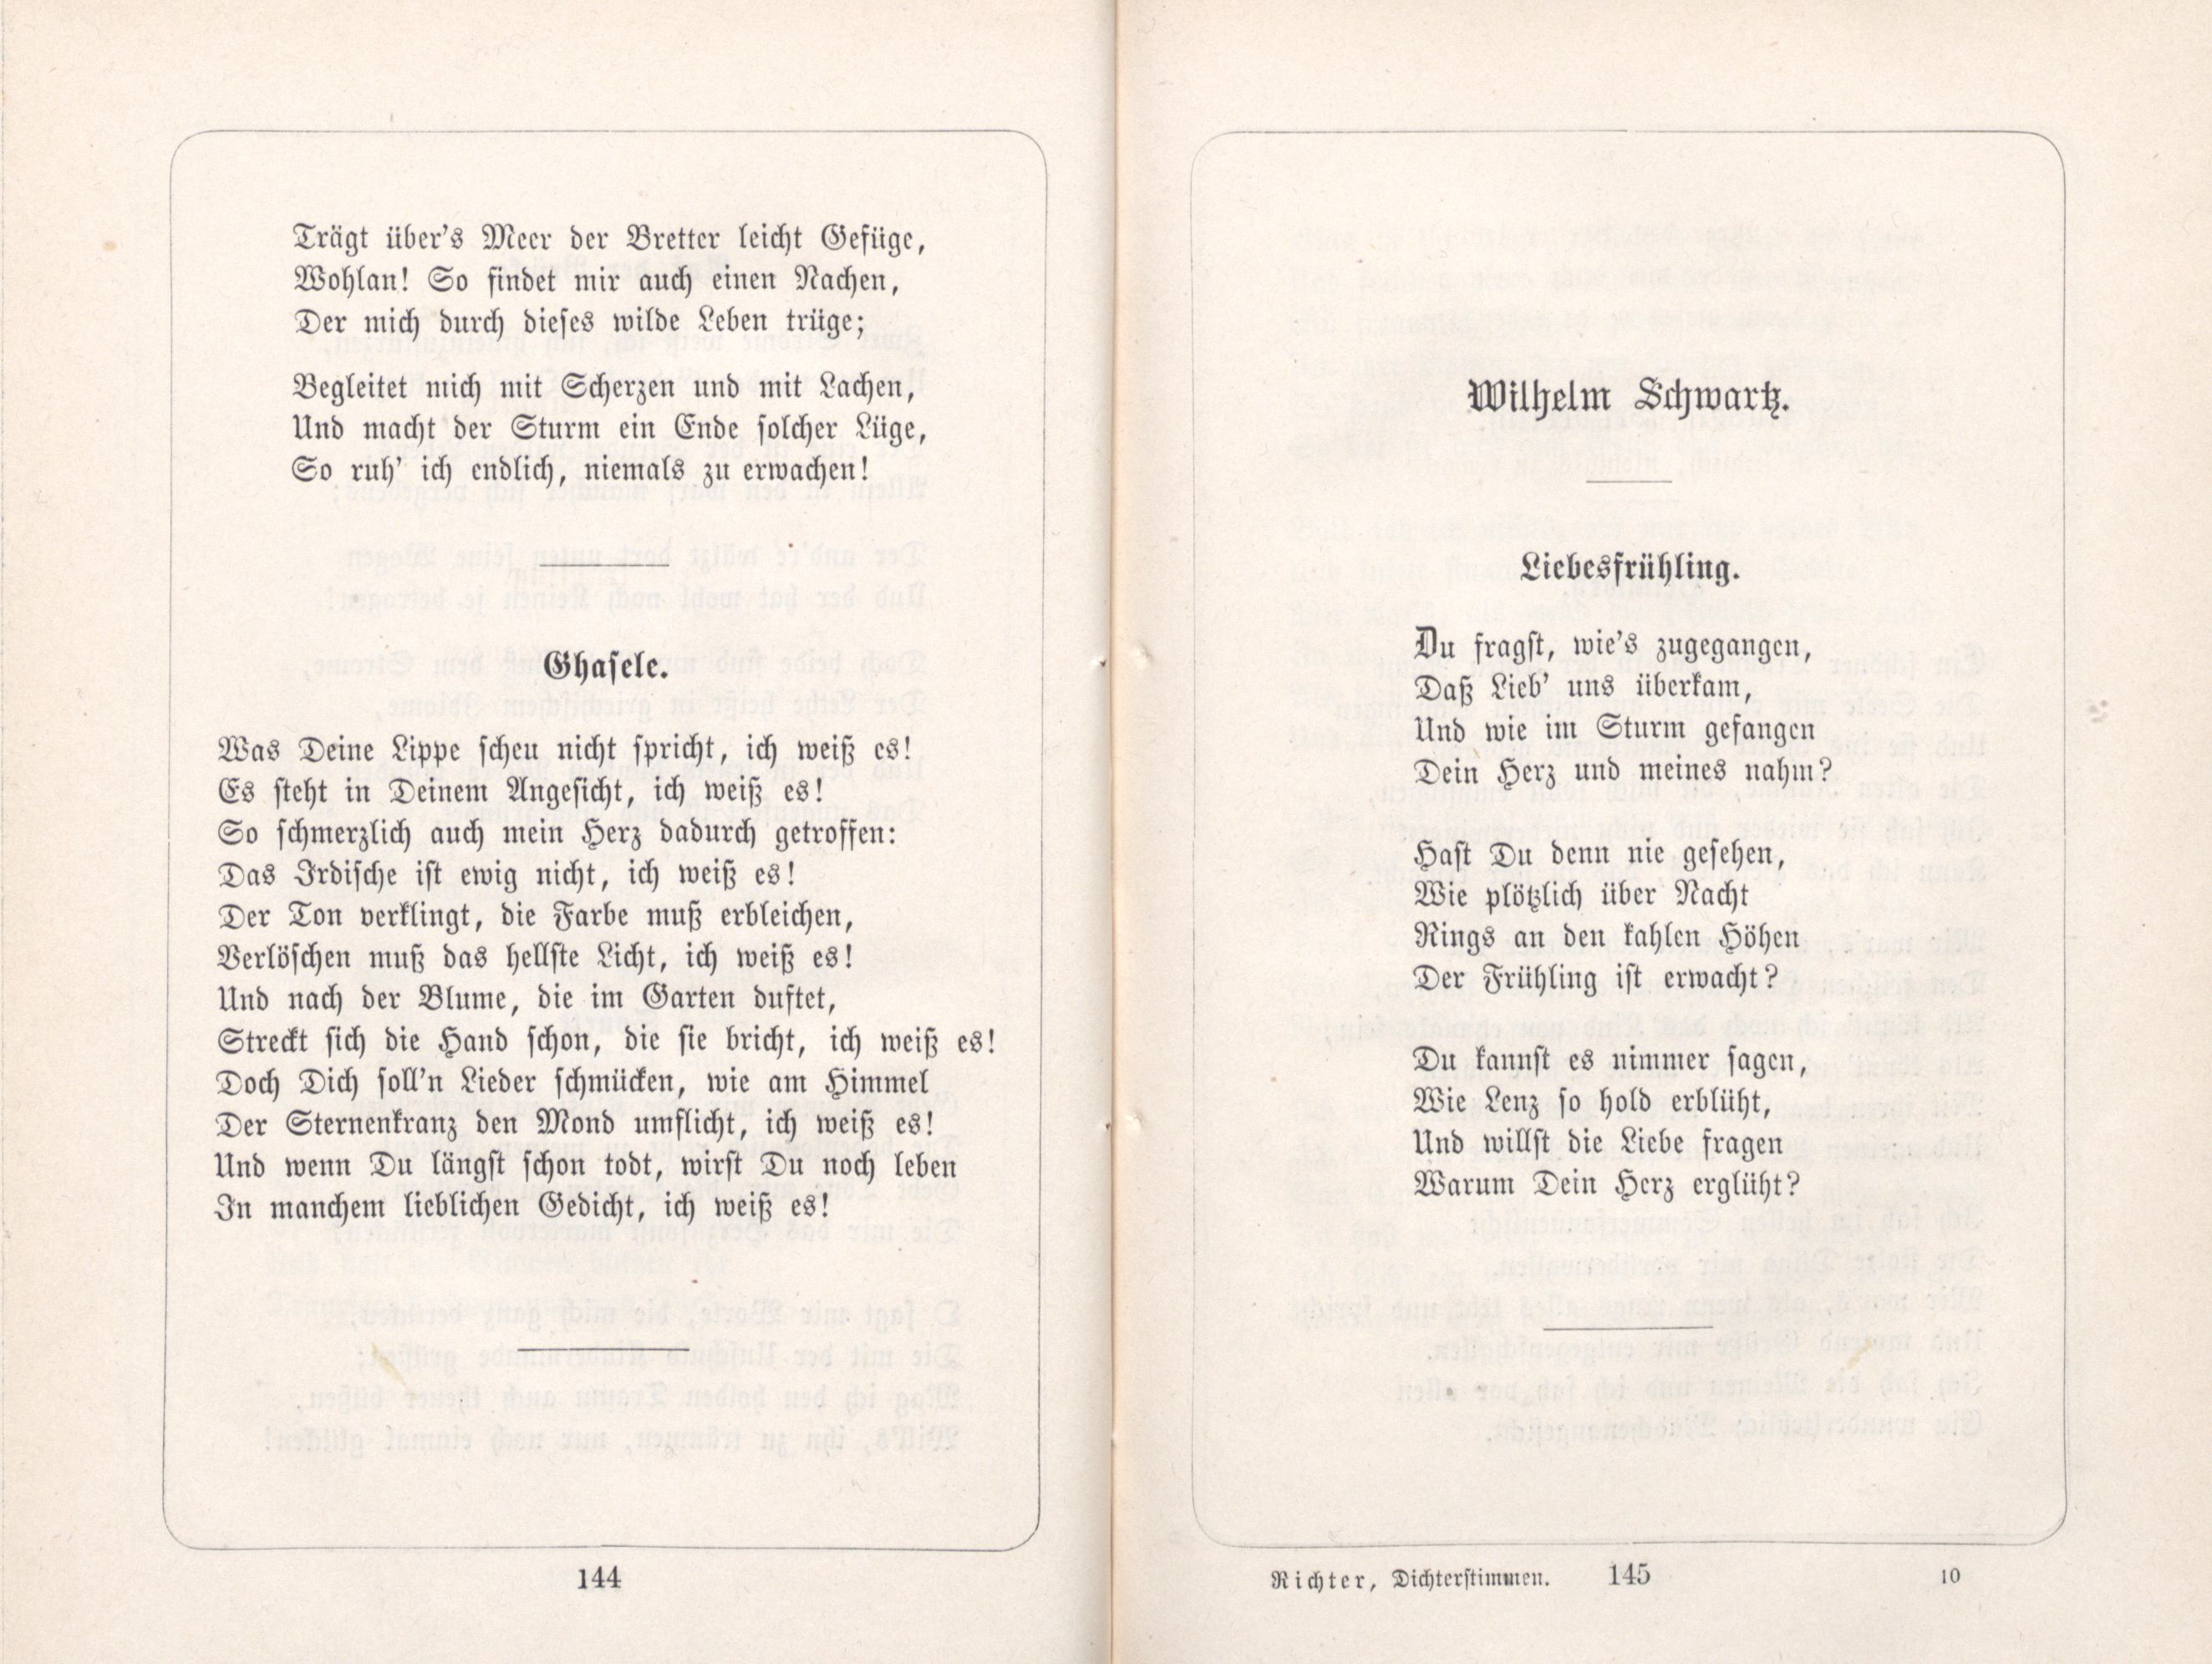 Liebesfrühling (1885) | 1. (144-145) Основной текст